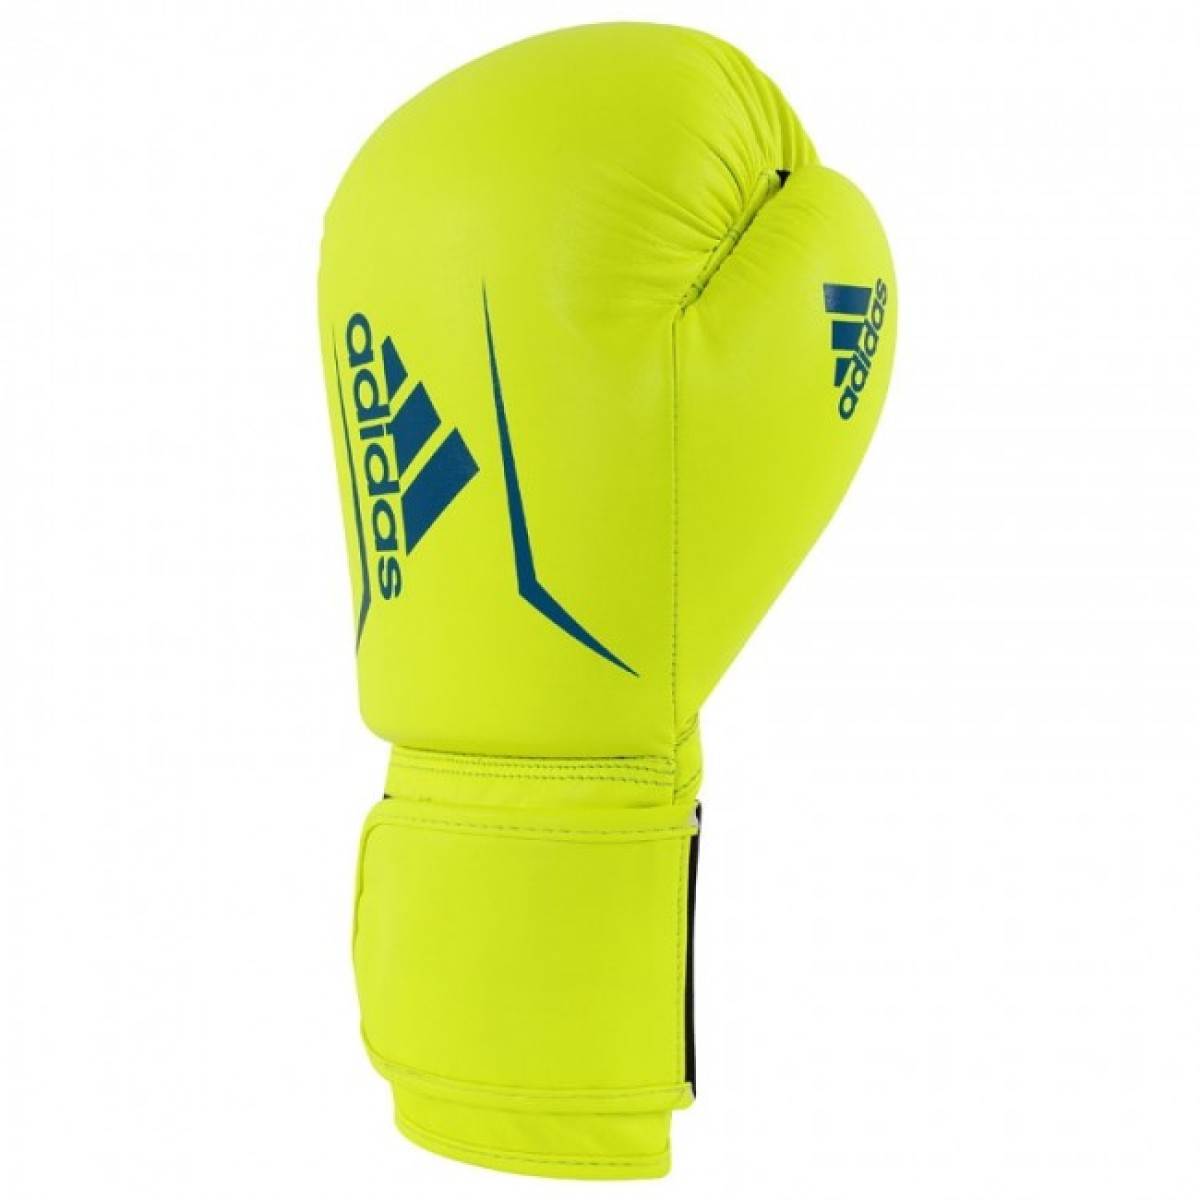 Kinderboxhandschuhe Speed gelb/blau adidas 50 | Boxhandschuhe